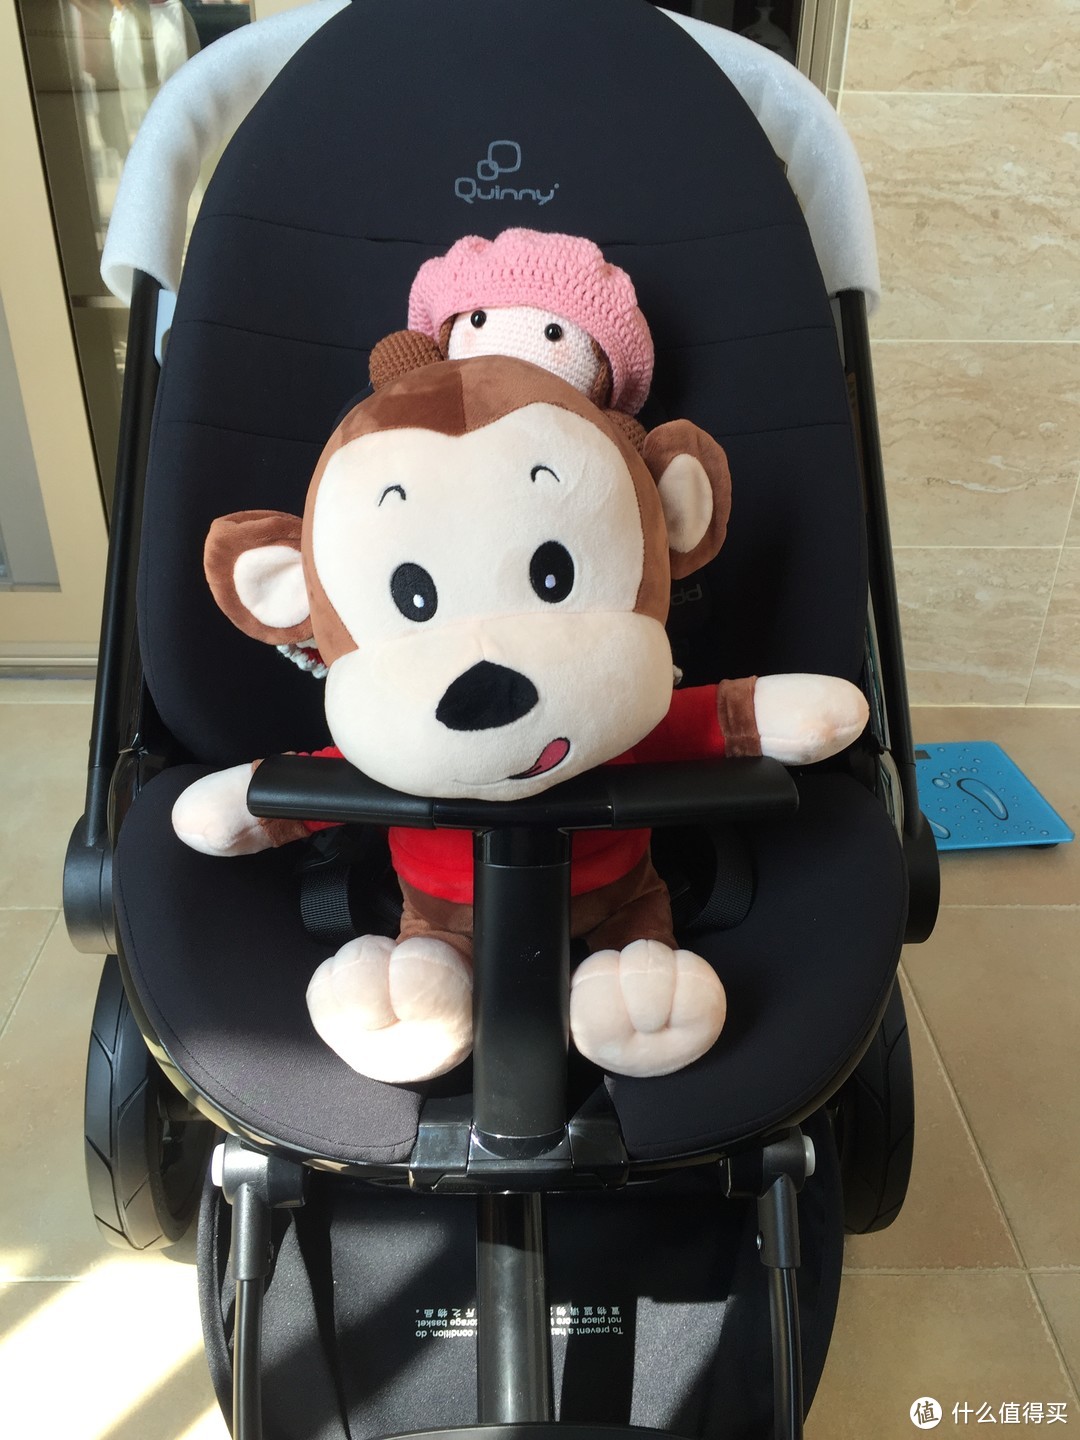 Quinny婴儿车—孩子的专属座驾